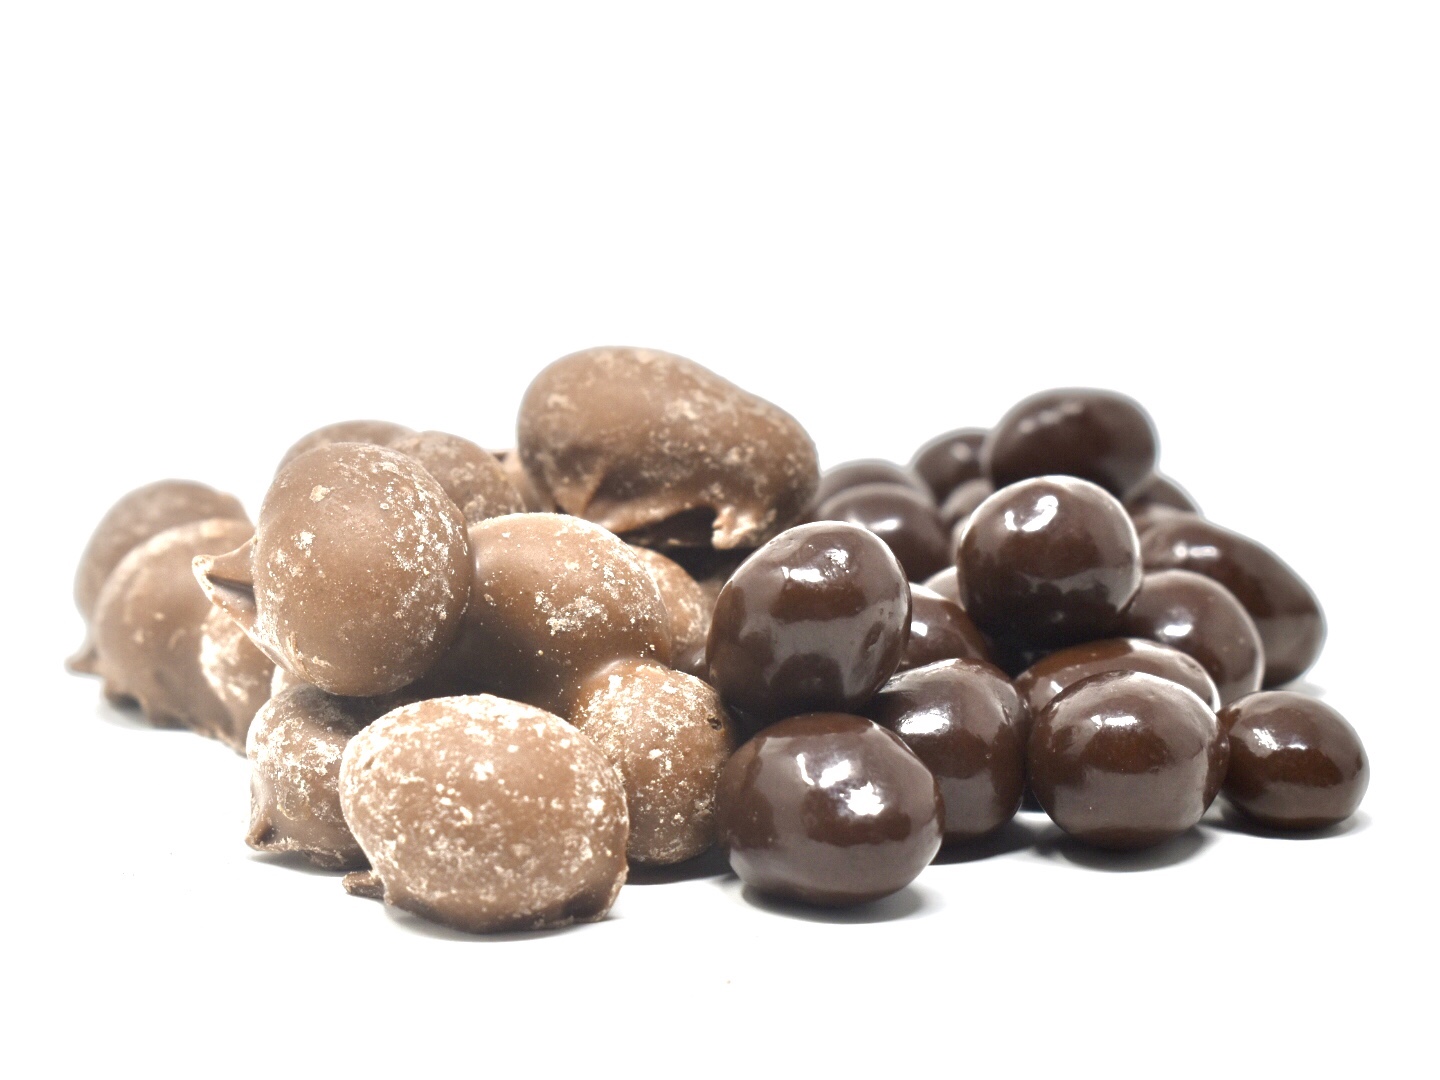 Candy Coated Chocolate Peanuts